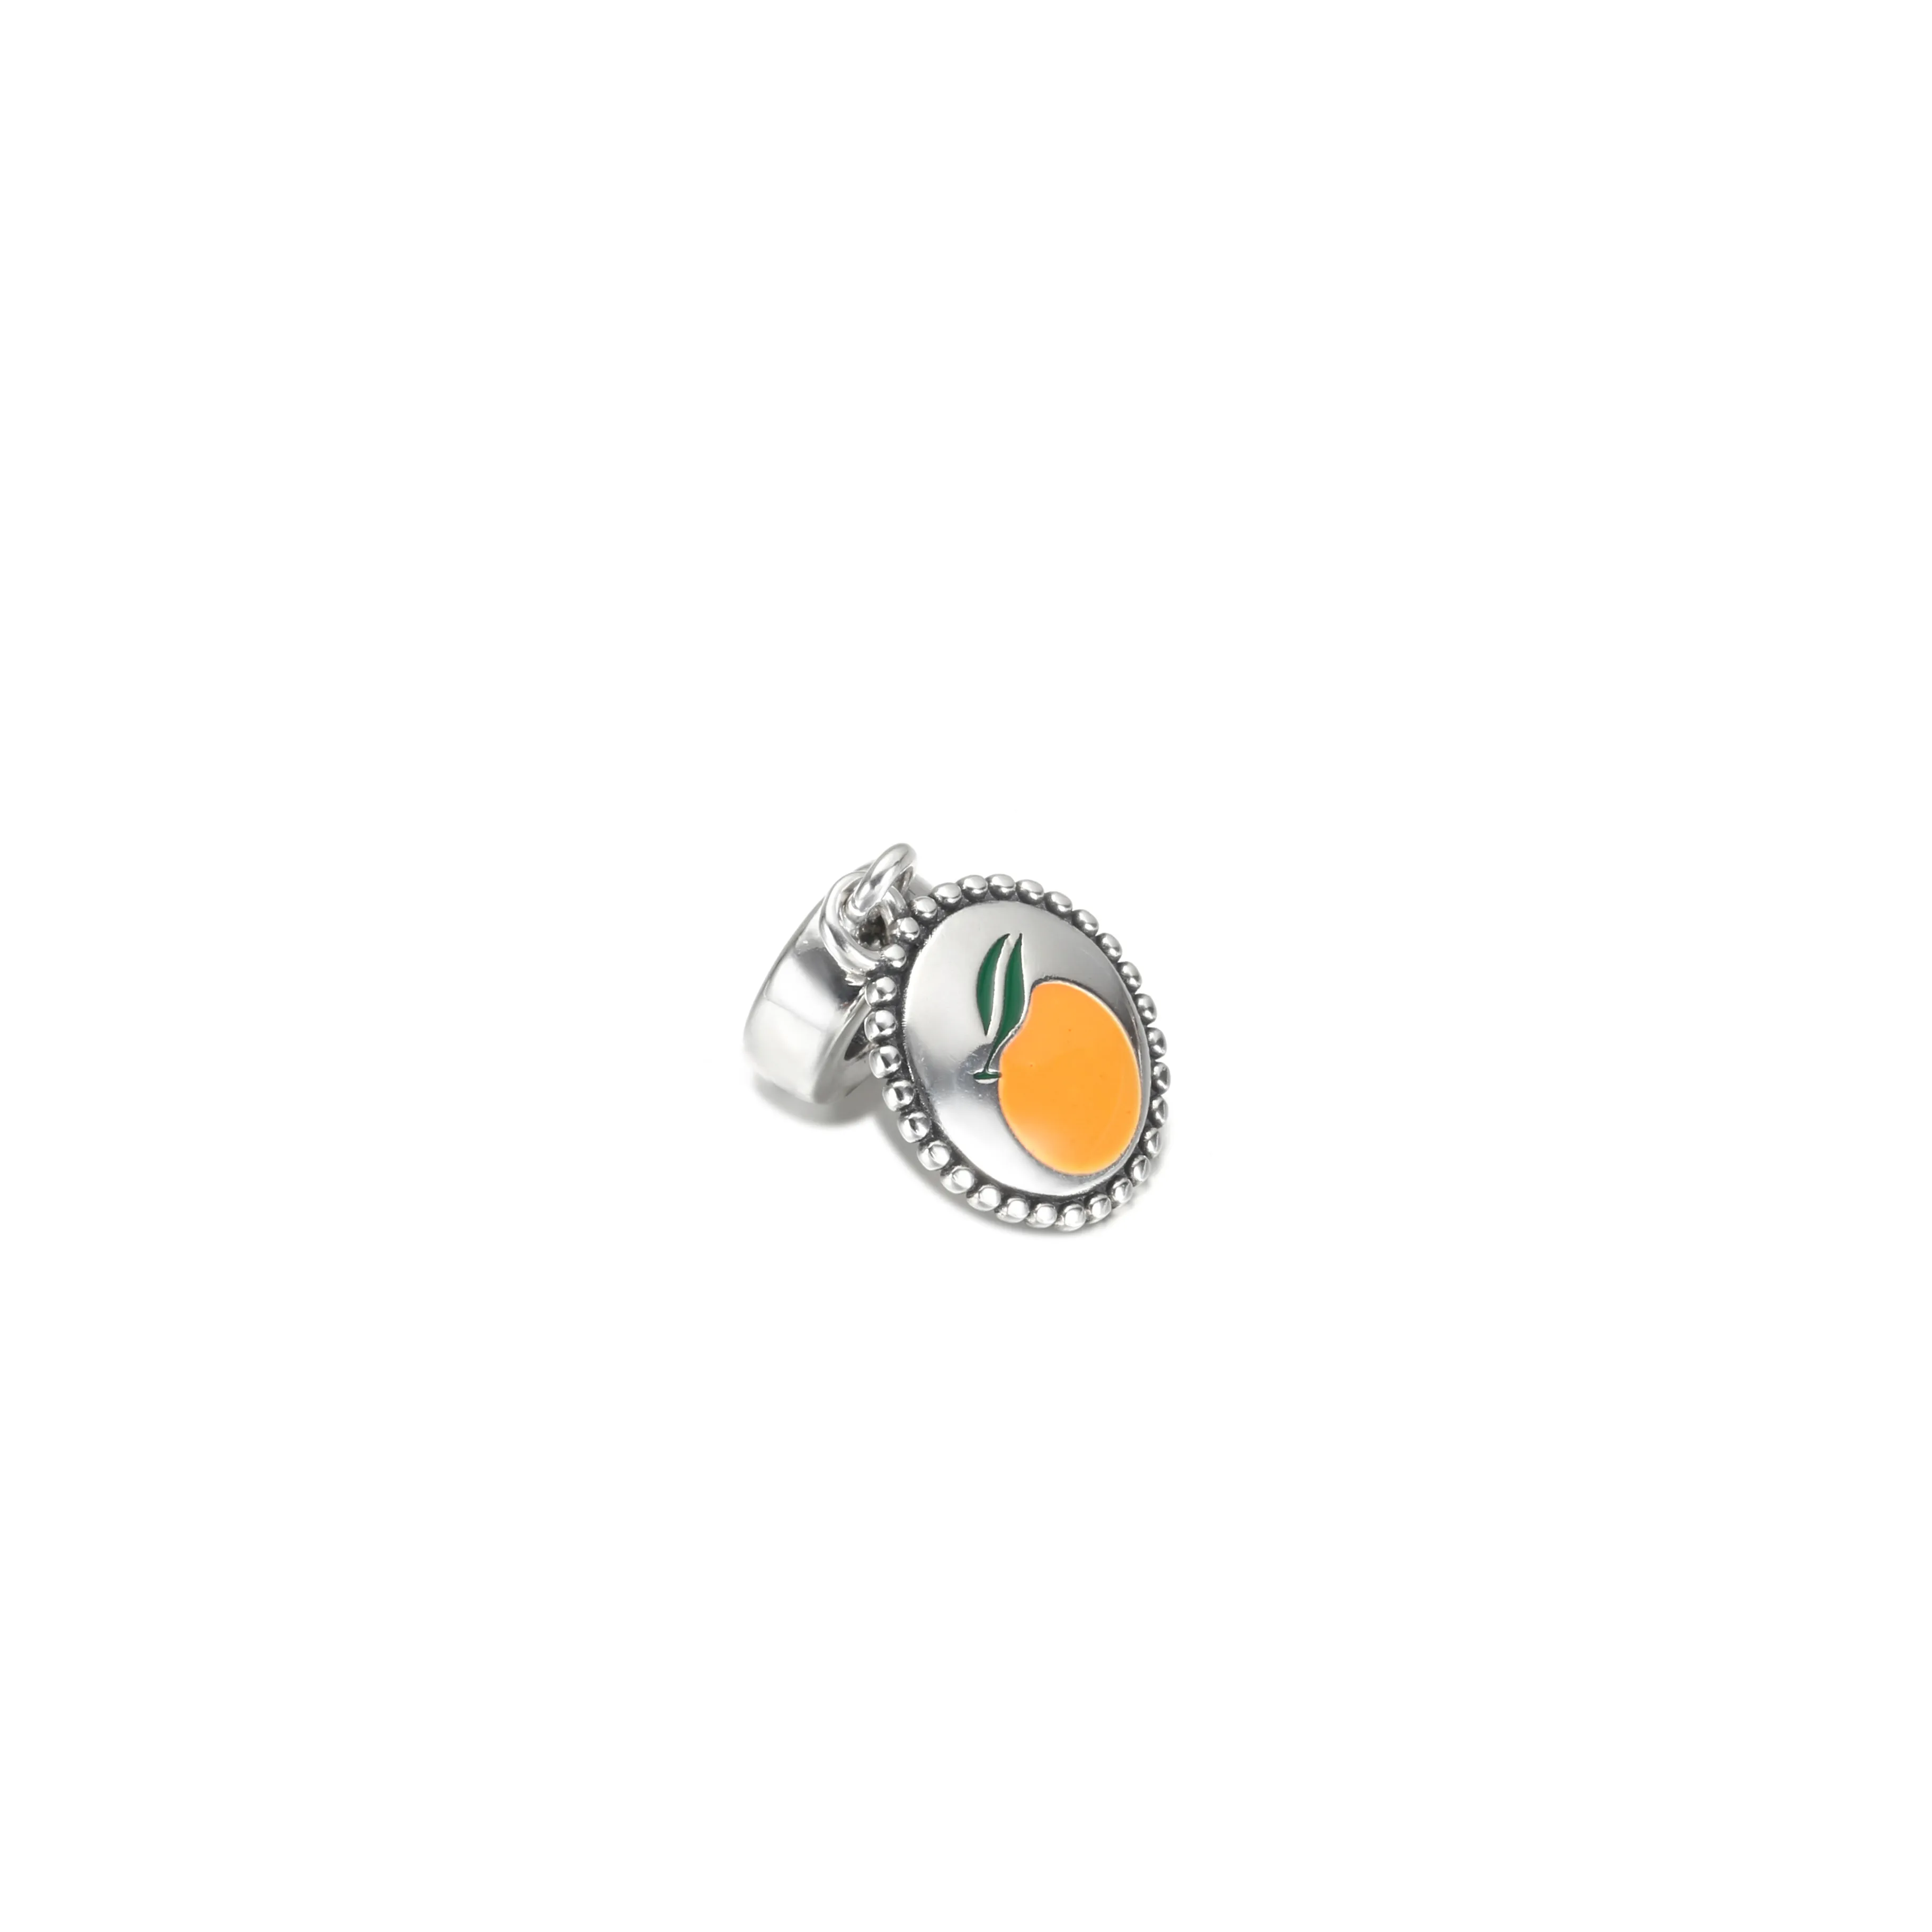 PANDORA Pandantiv rotund cu franjuri portocalii - 791169C00_E026